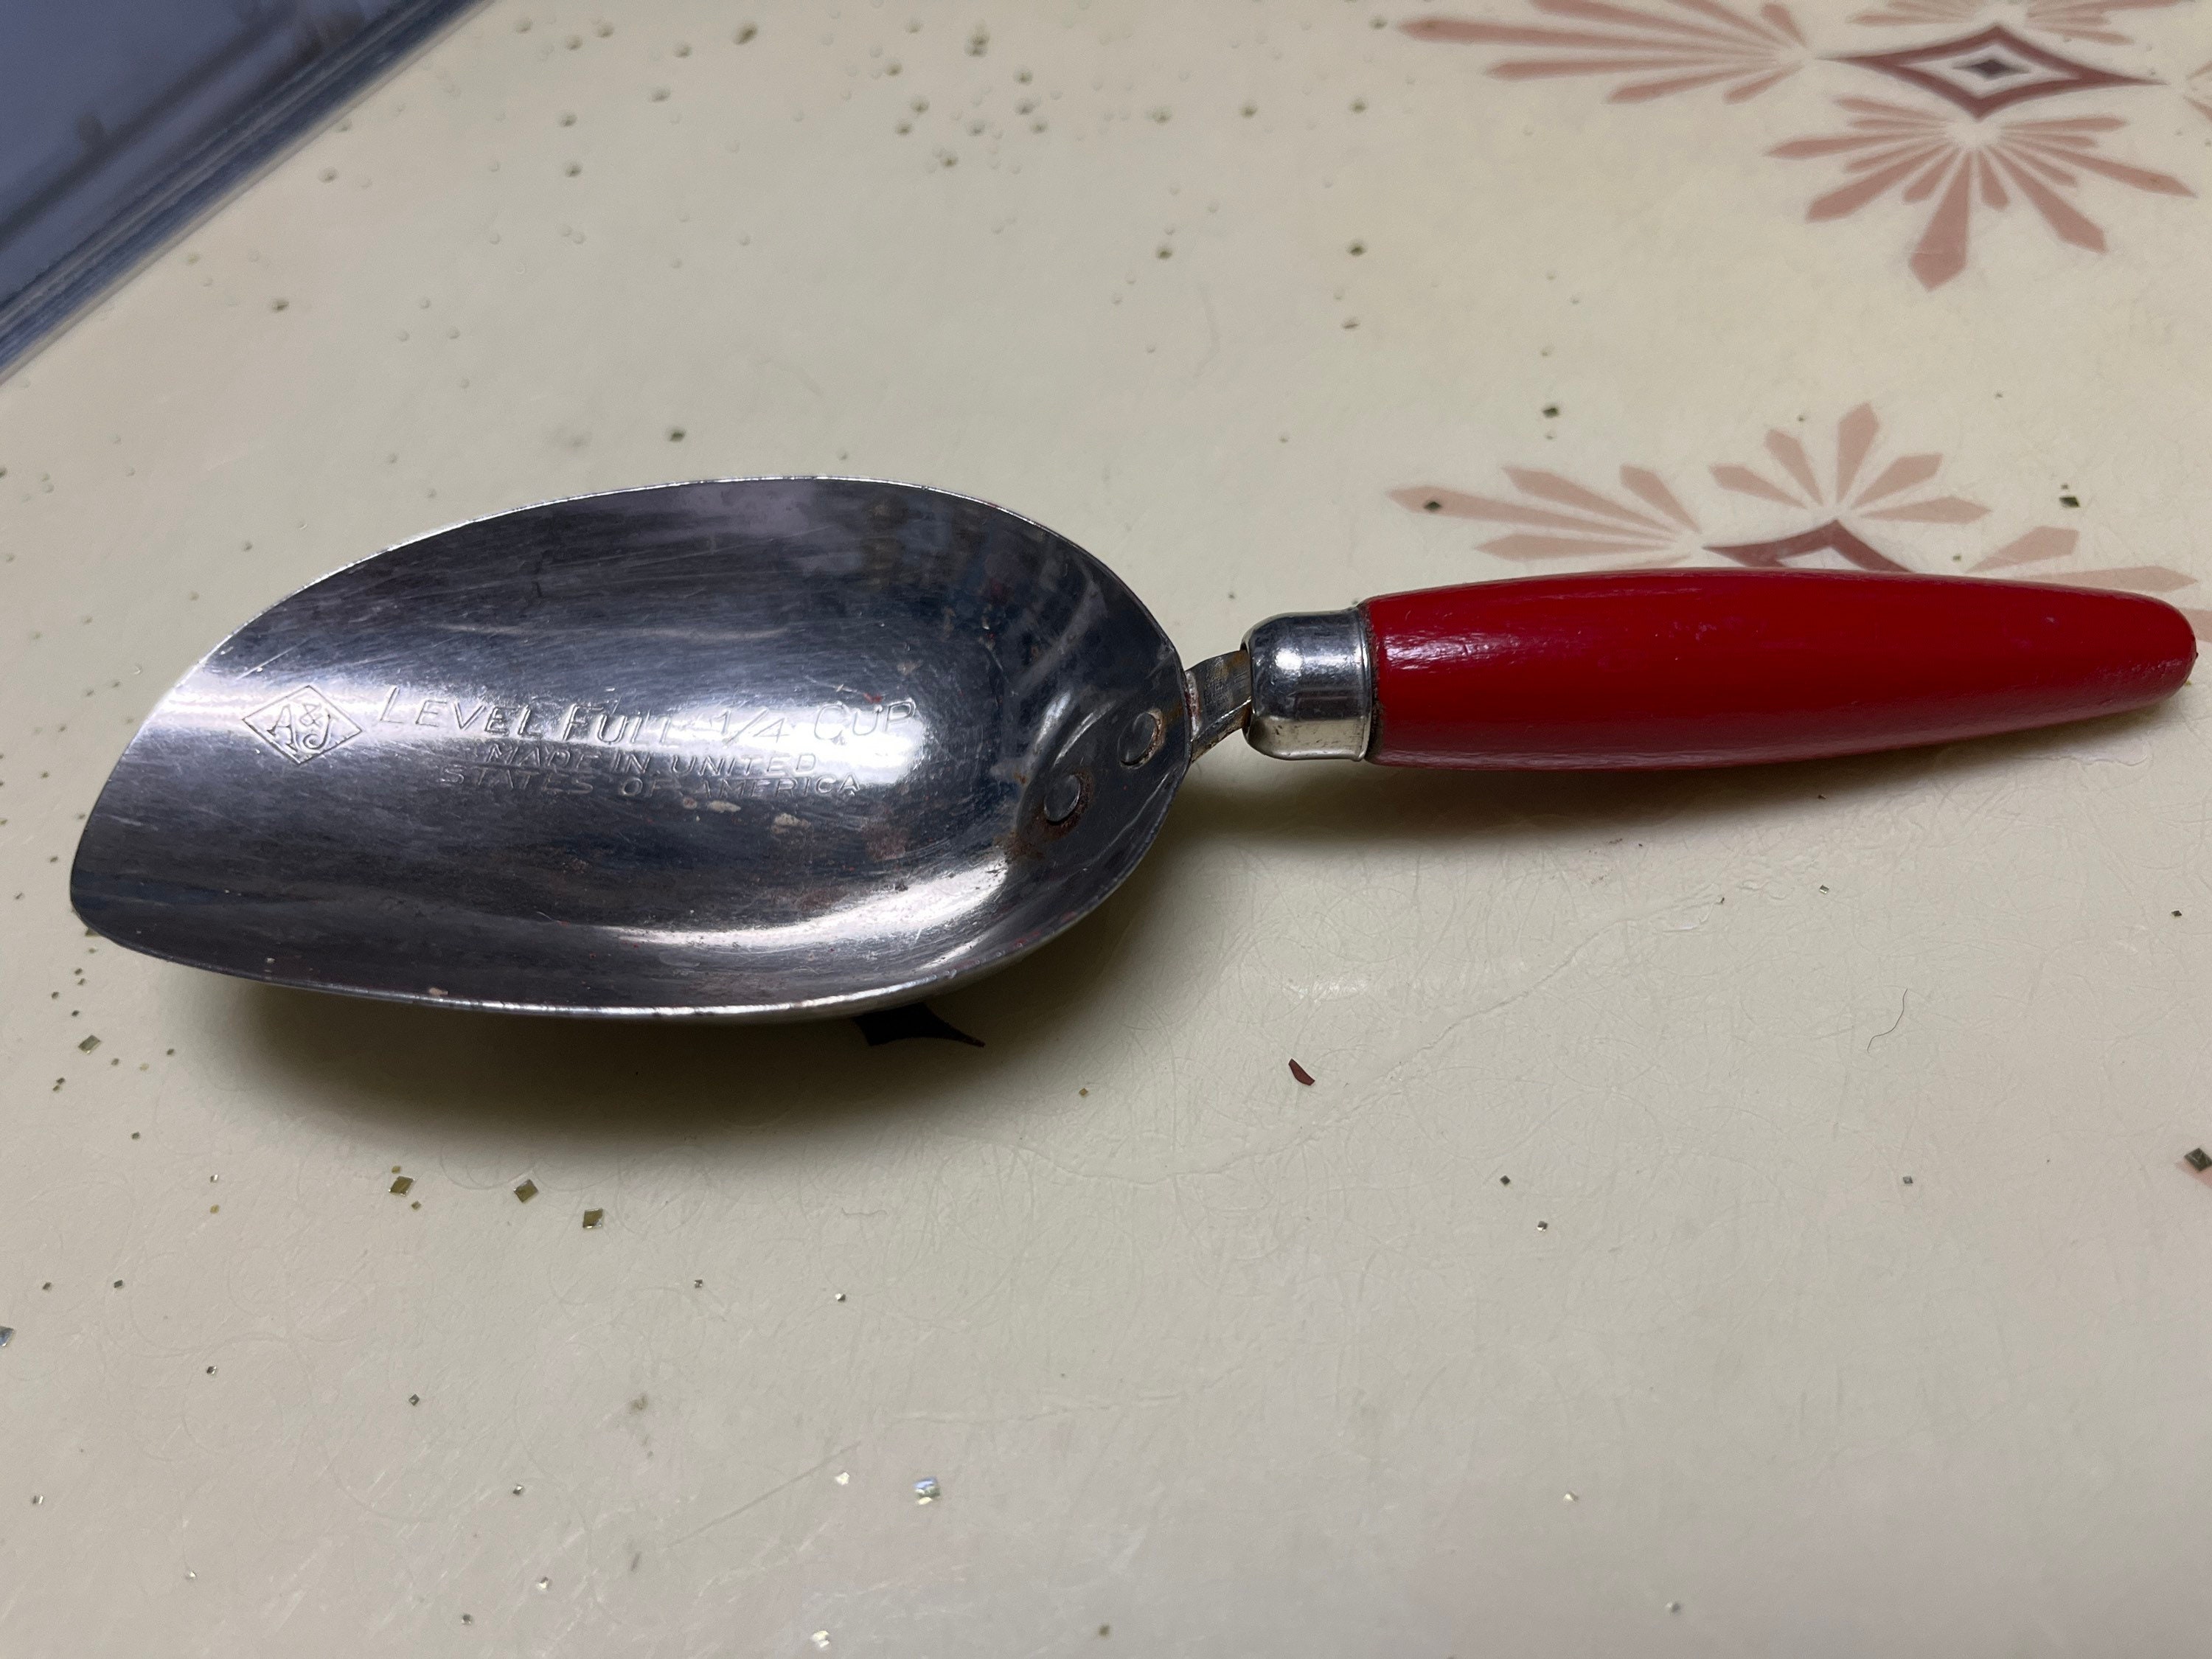 Measuring Spoon Set — U N E A R T H E N